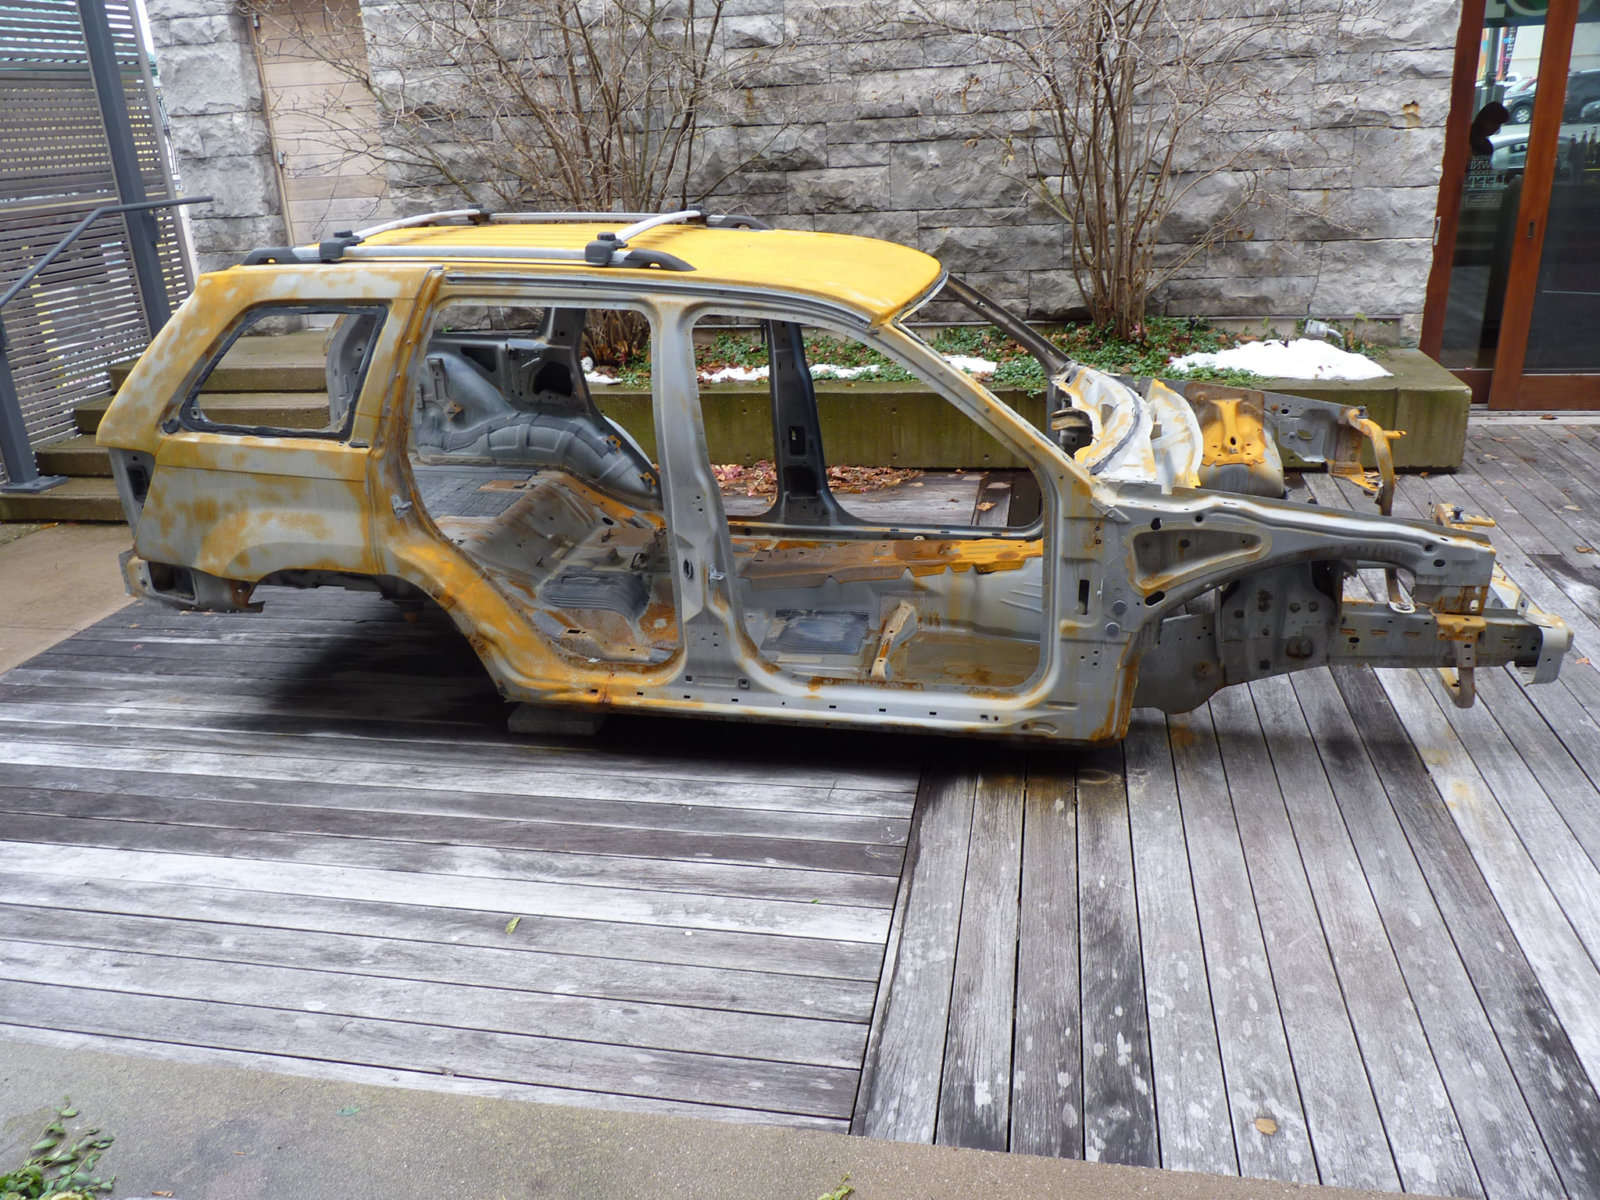 Duane Linklater, 2005 Grand Jeep Cherokee, 2013, steel frame of artist’s vehicle. dimensions variable